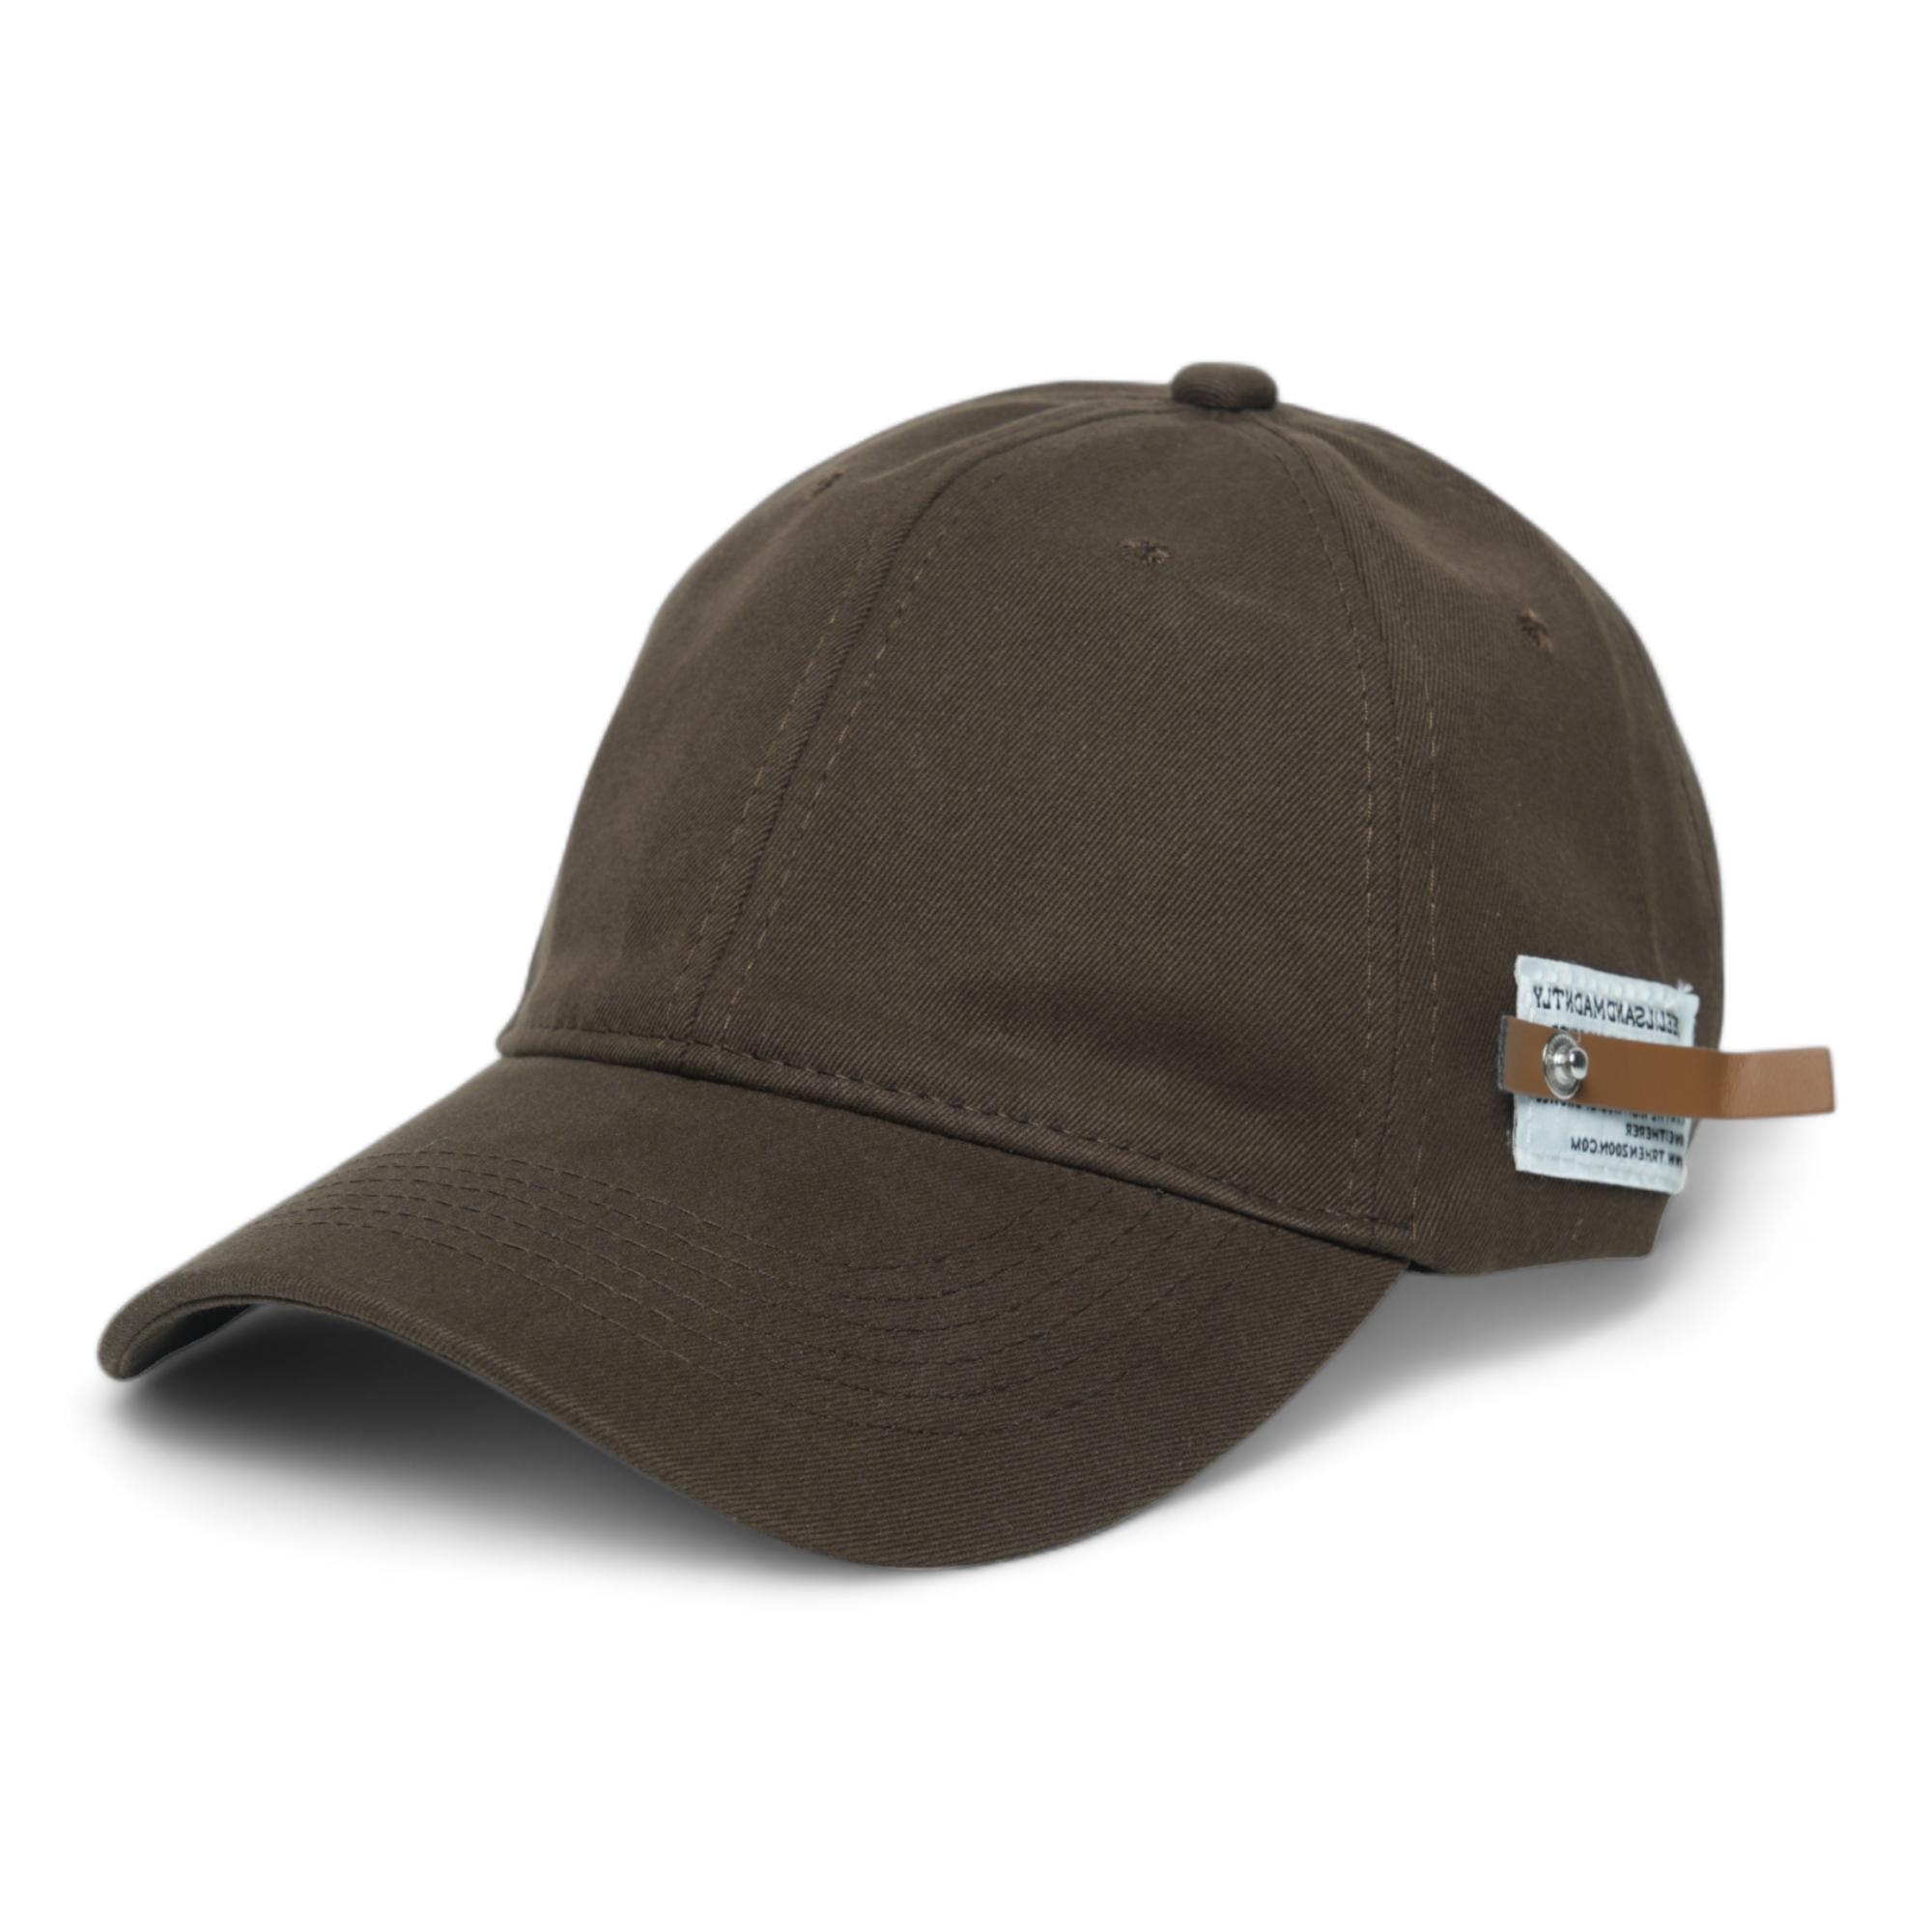 Chokore Curved Brim Leather Label Baseball Cap (Light Brown)